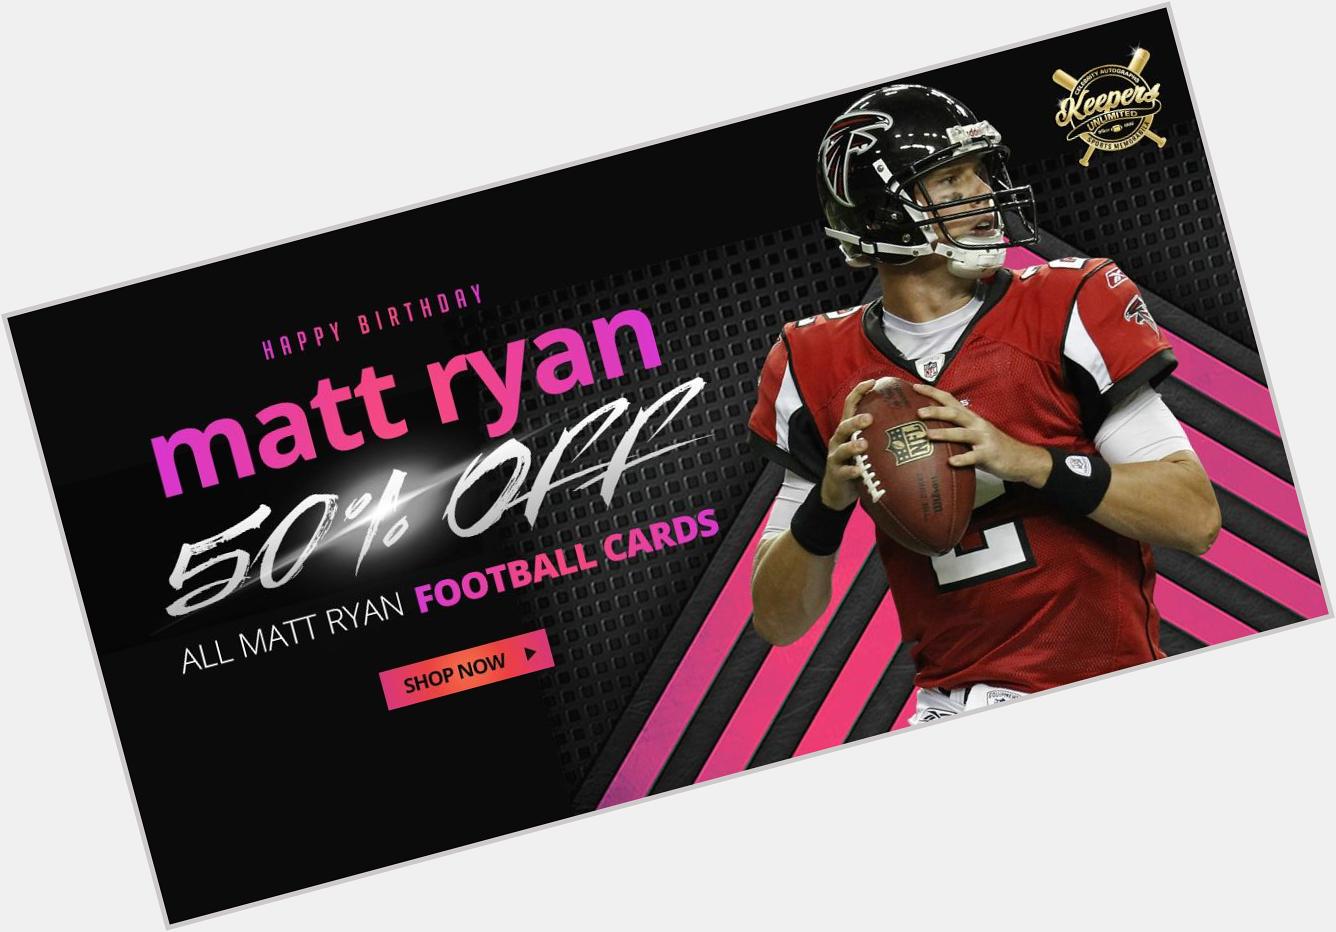 Happy Birthday to Matt Ryan! Take 50% Off All Matt Ryan Football Cards! 